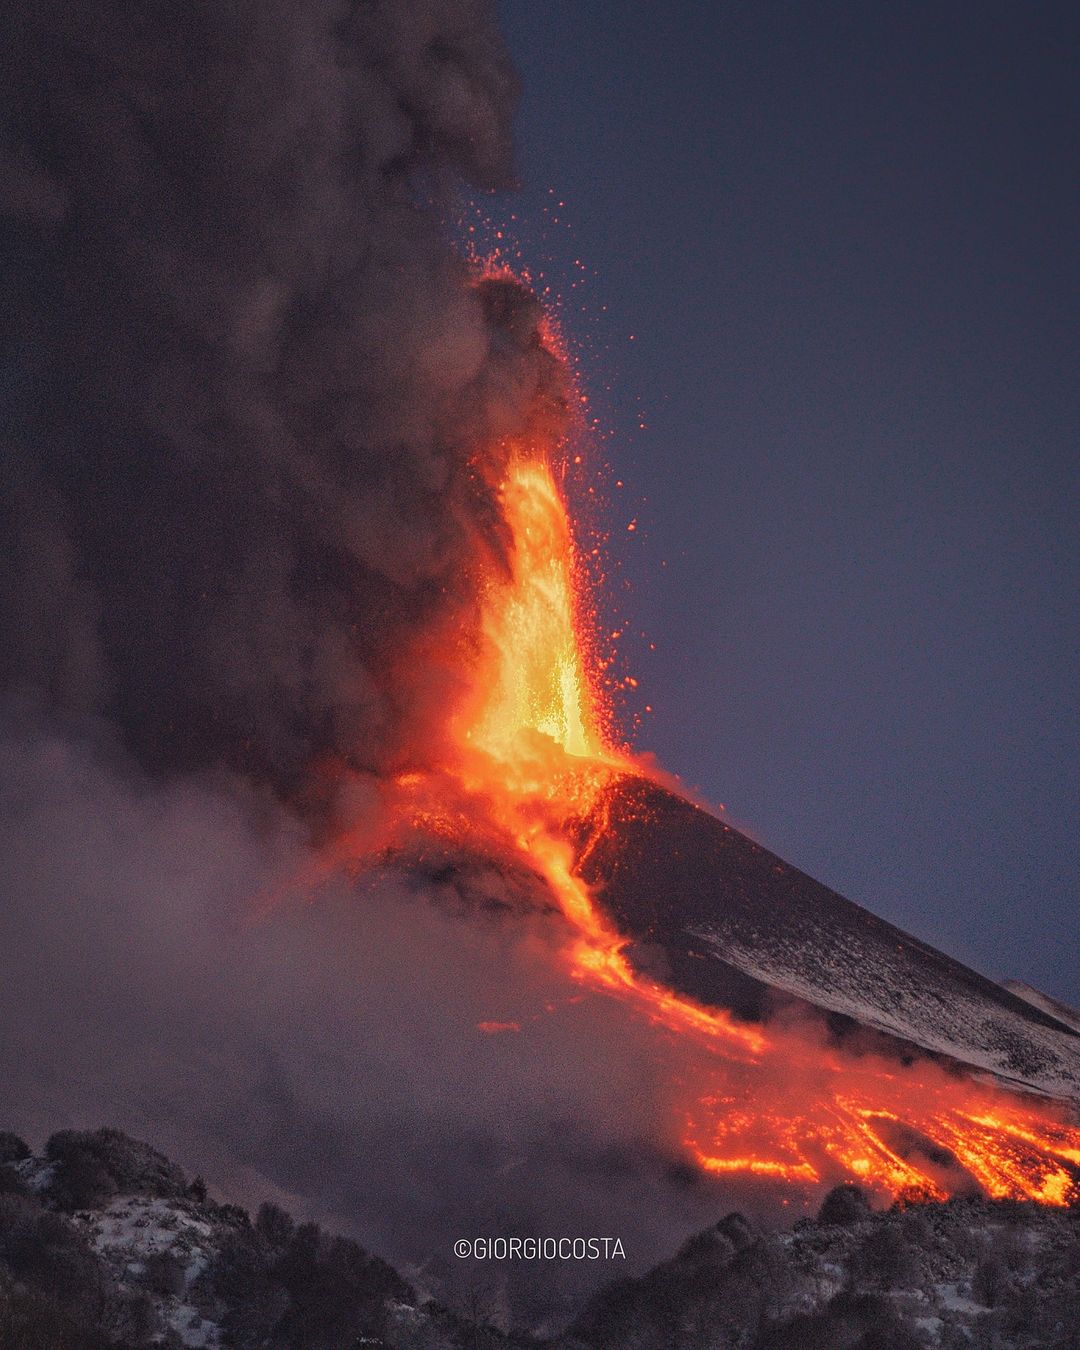 Lava fountain during the peak of the lastest paroxysm at Etna's New SE crater (image: Giorgio Costa / facebook)